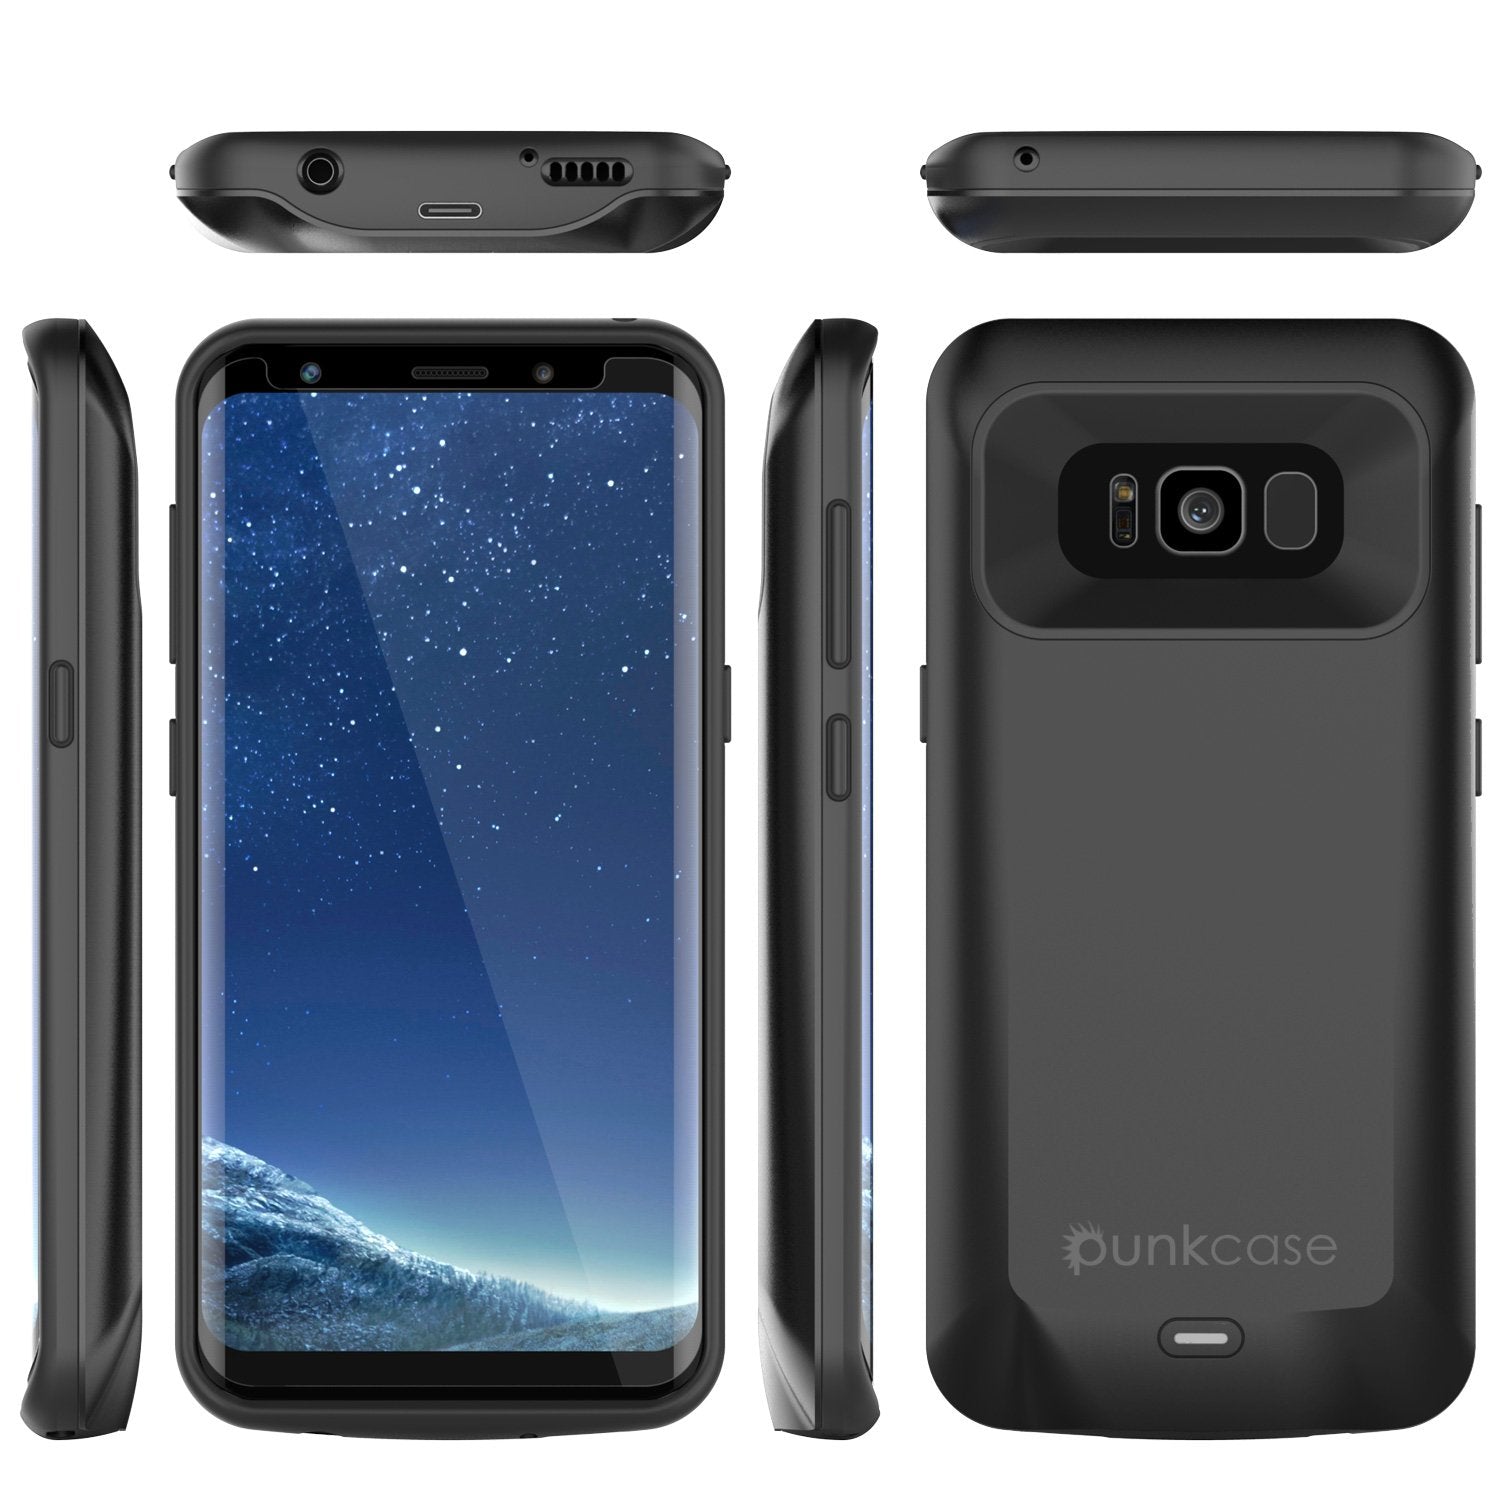 Galaxy S8 PLUS Battery Case, Punkcase 5500mAH Charger Black Case